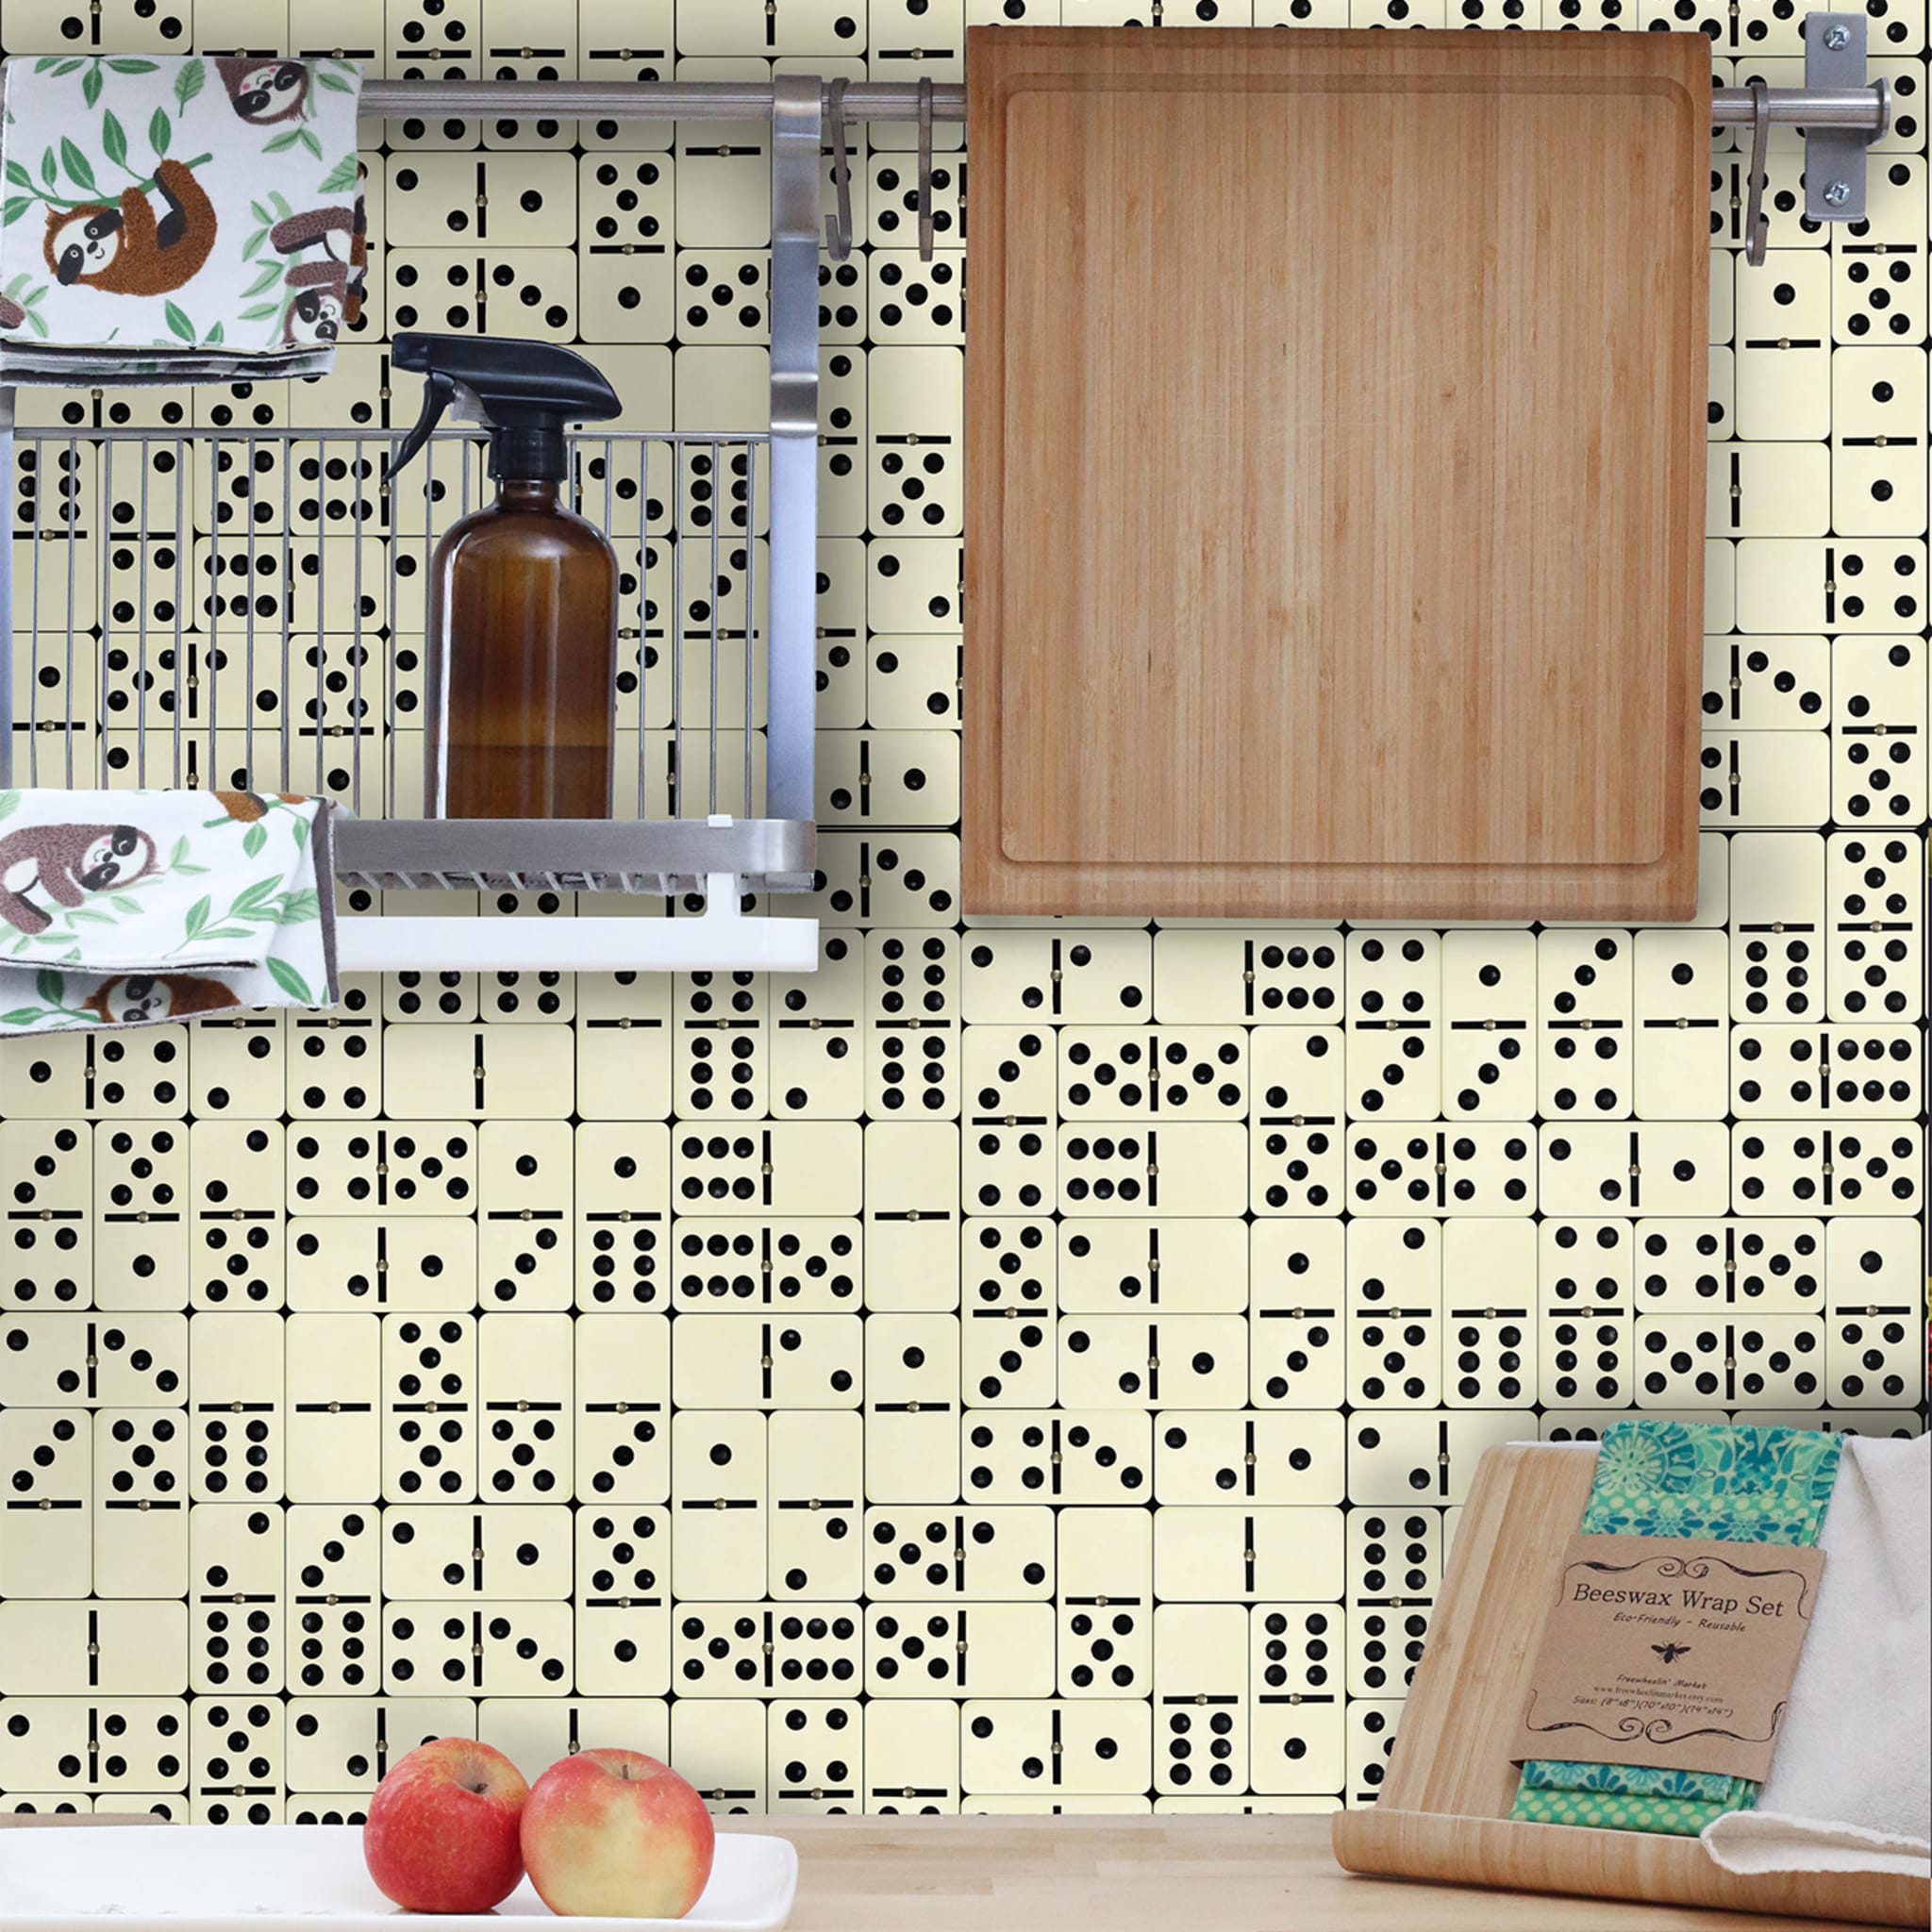 Playful Domino Tile Pattern Wallpaper - Alternative view 2